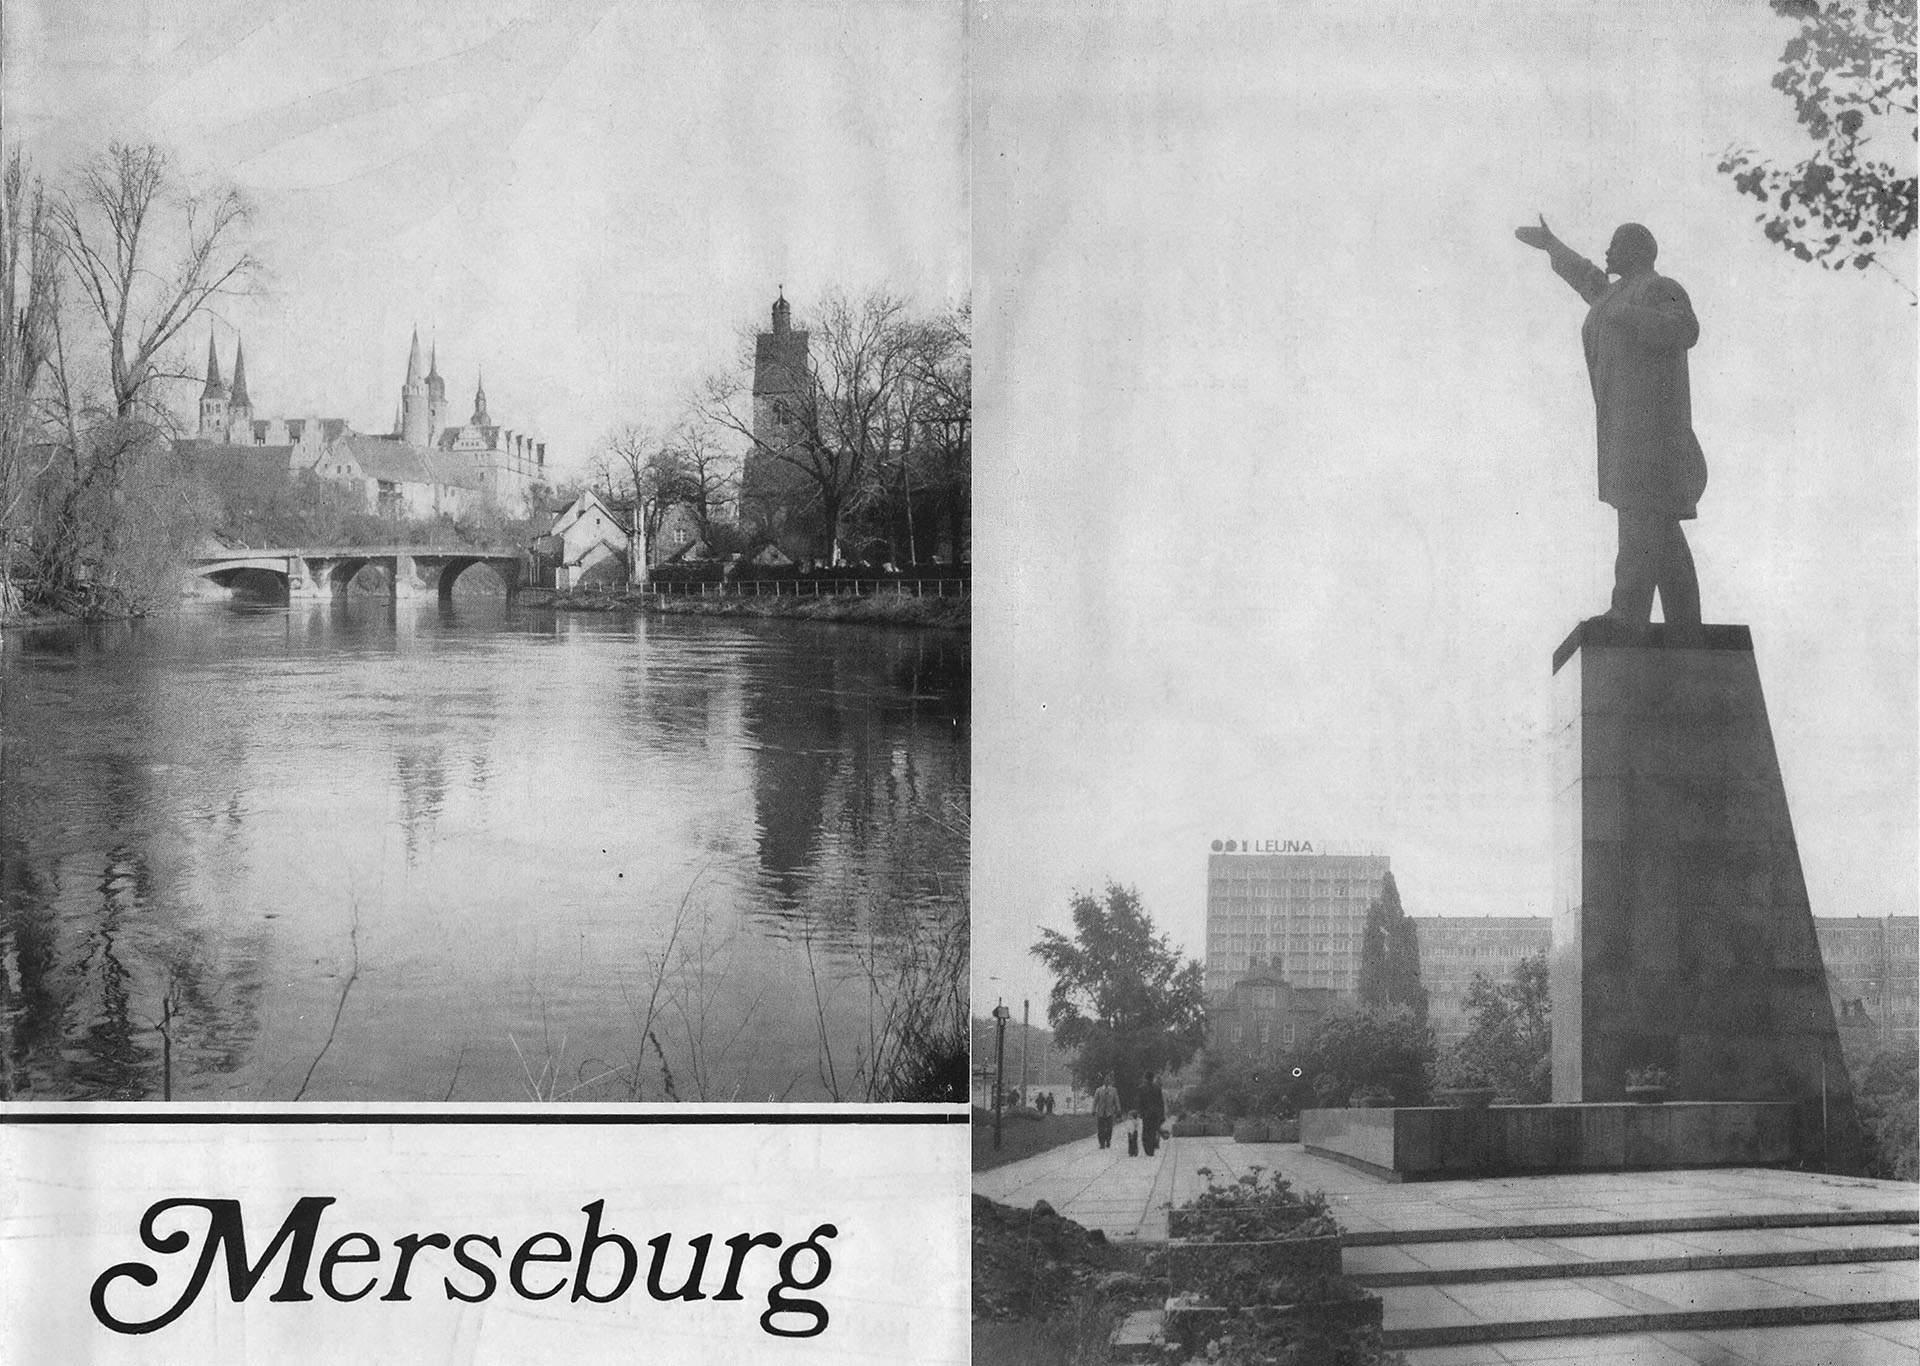 Merseburg